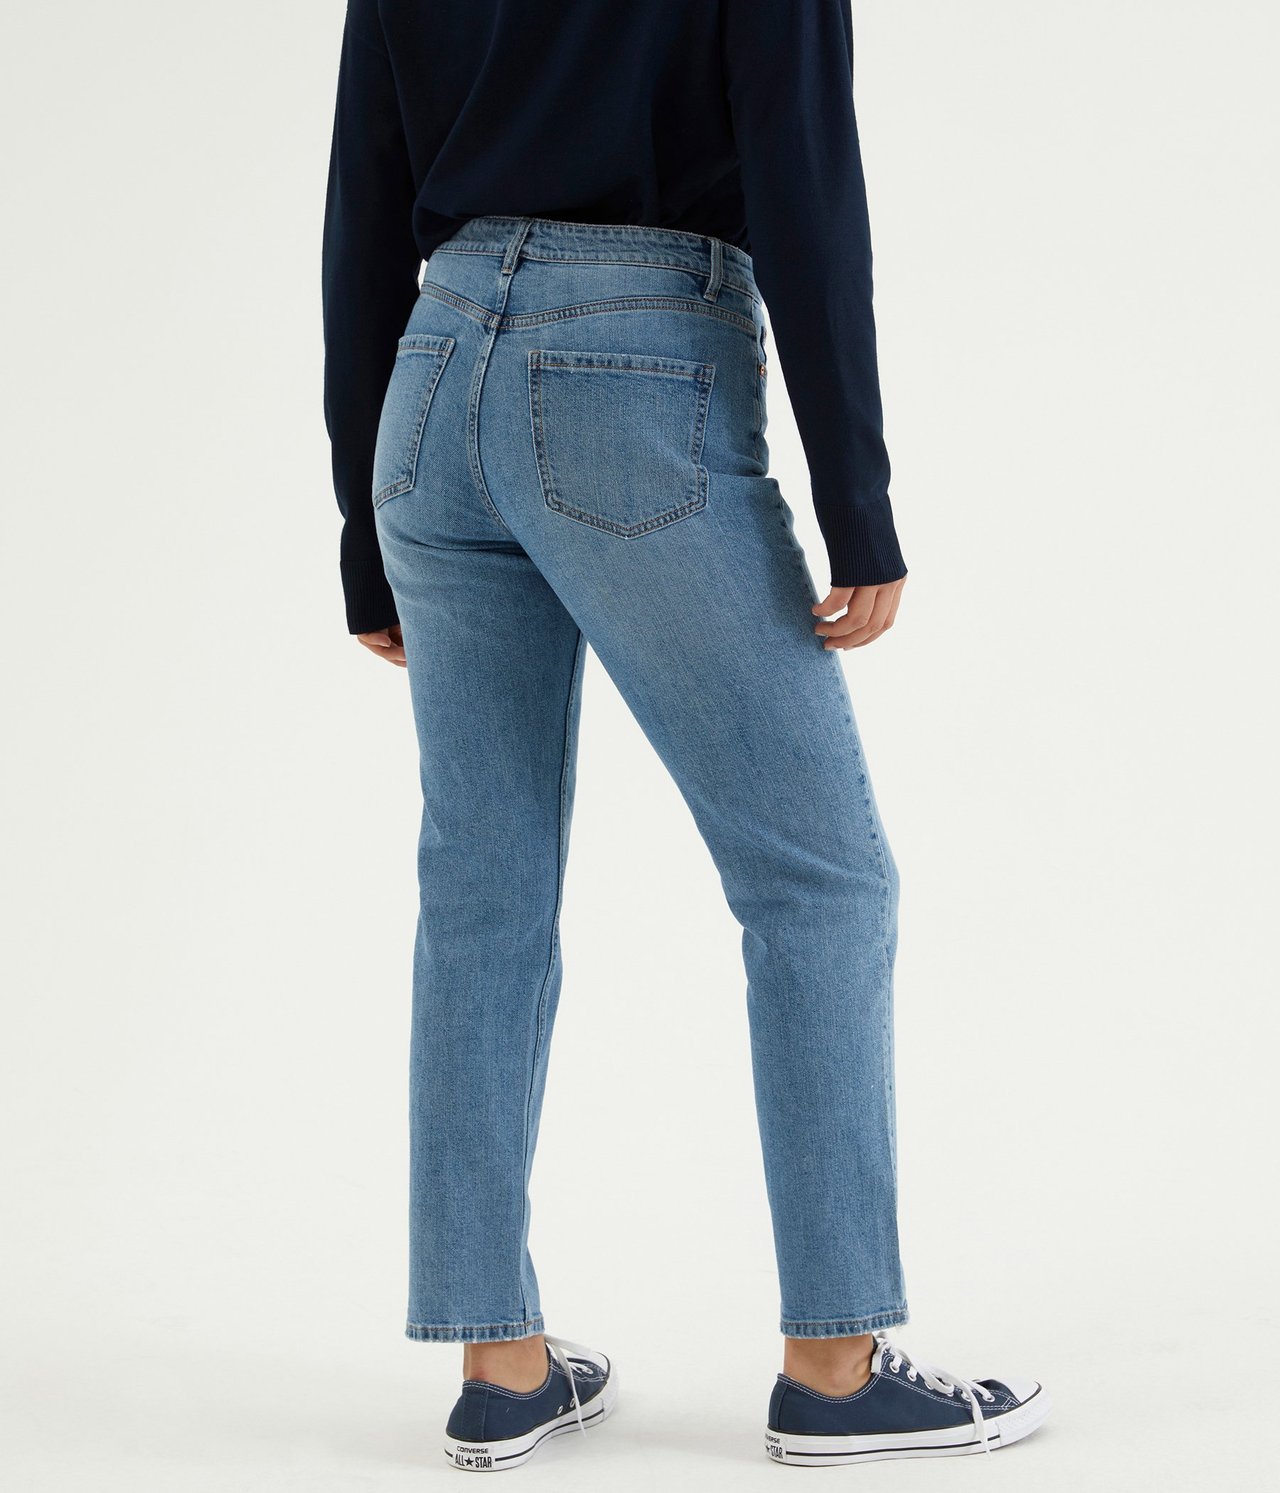 Jeans high waist tapered Lys denim - 34 - 2